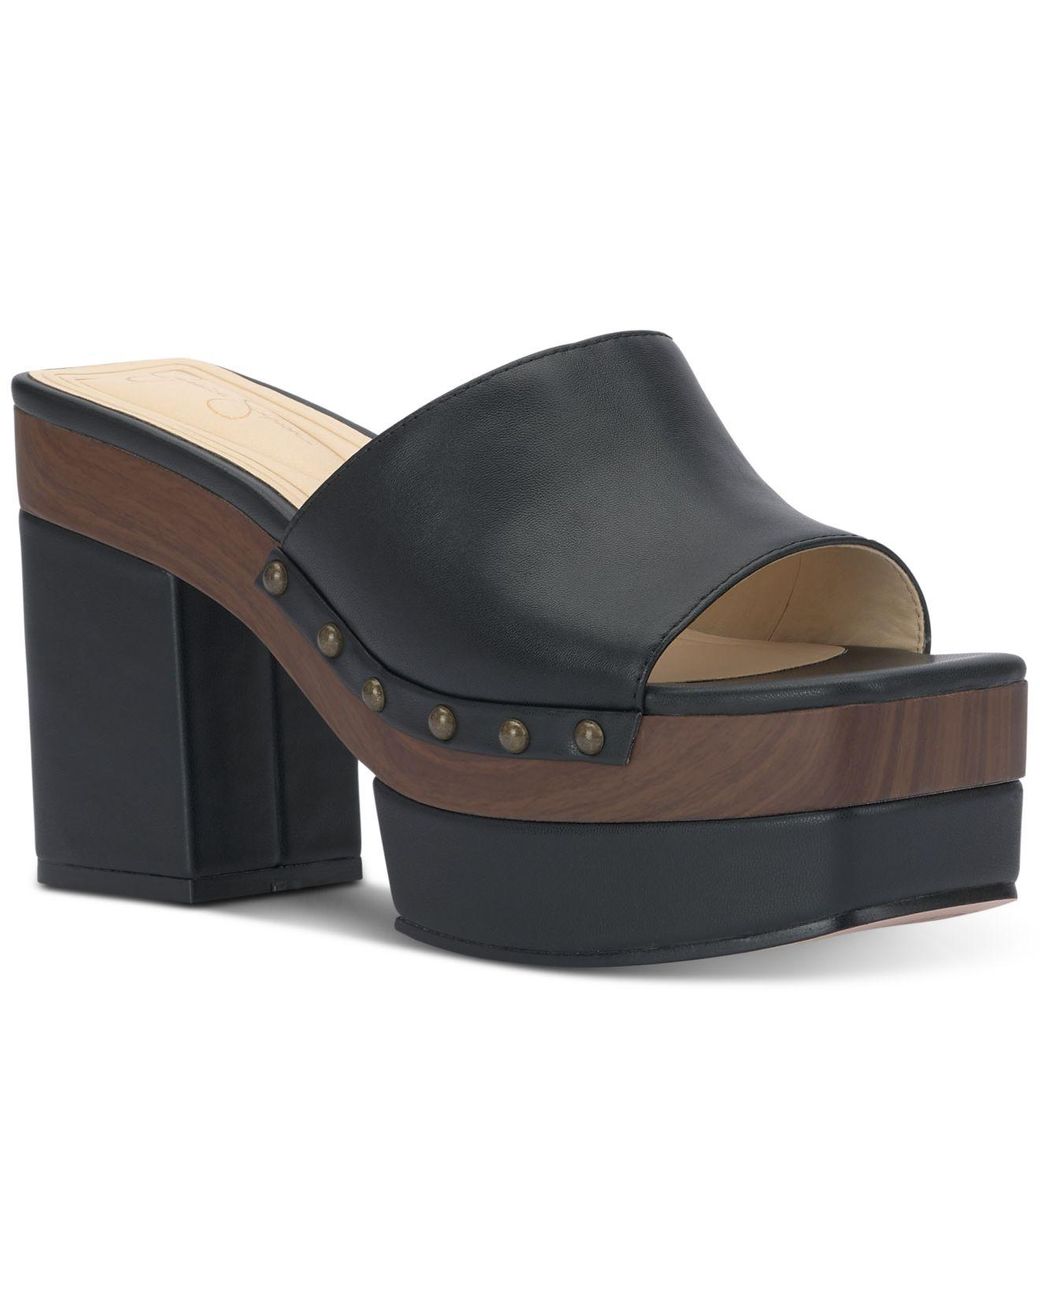 Jessica Simpson Charlete Studded Platform Wedge Sandals in Black | Lyst